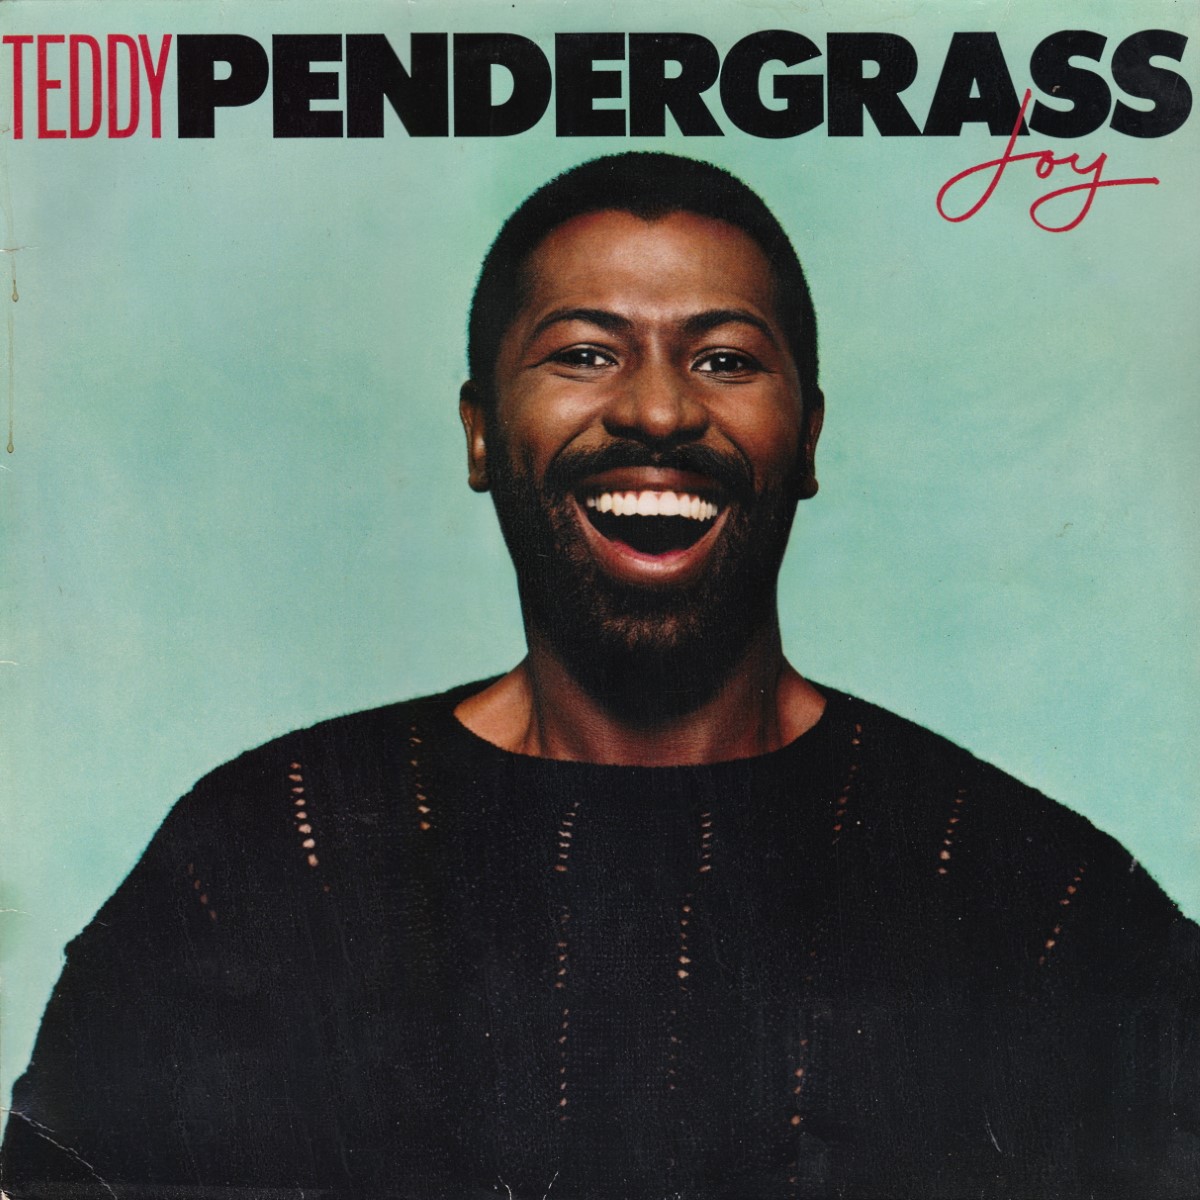 Teddy Pendergrass - Joy (1988)